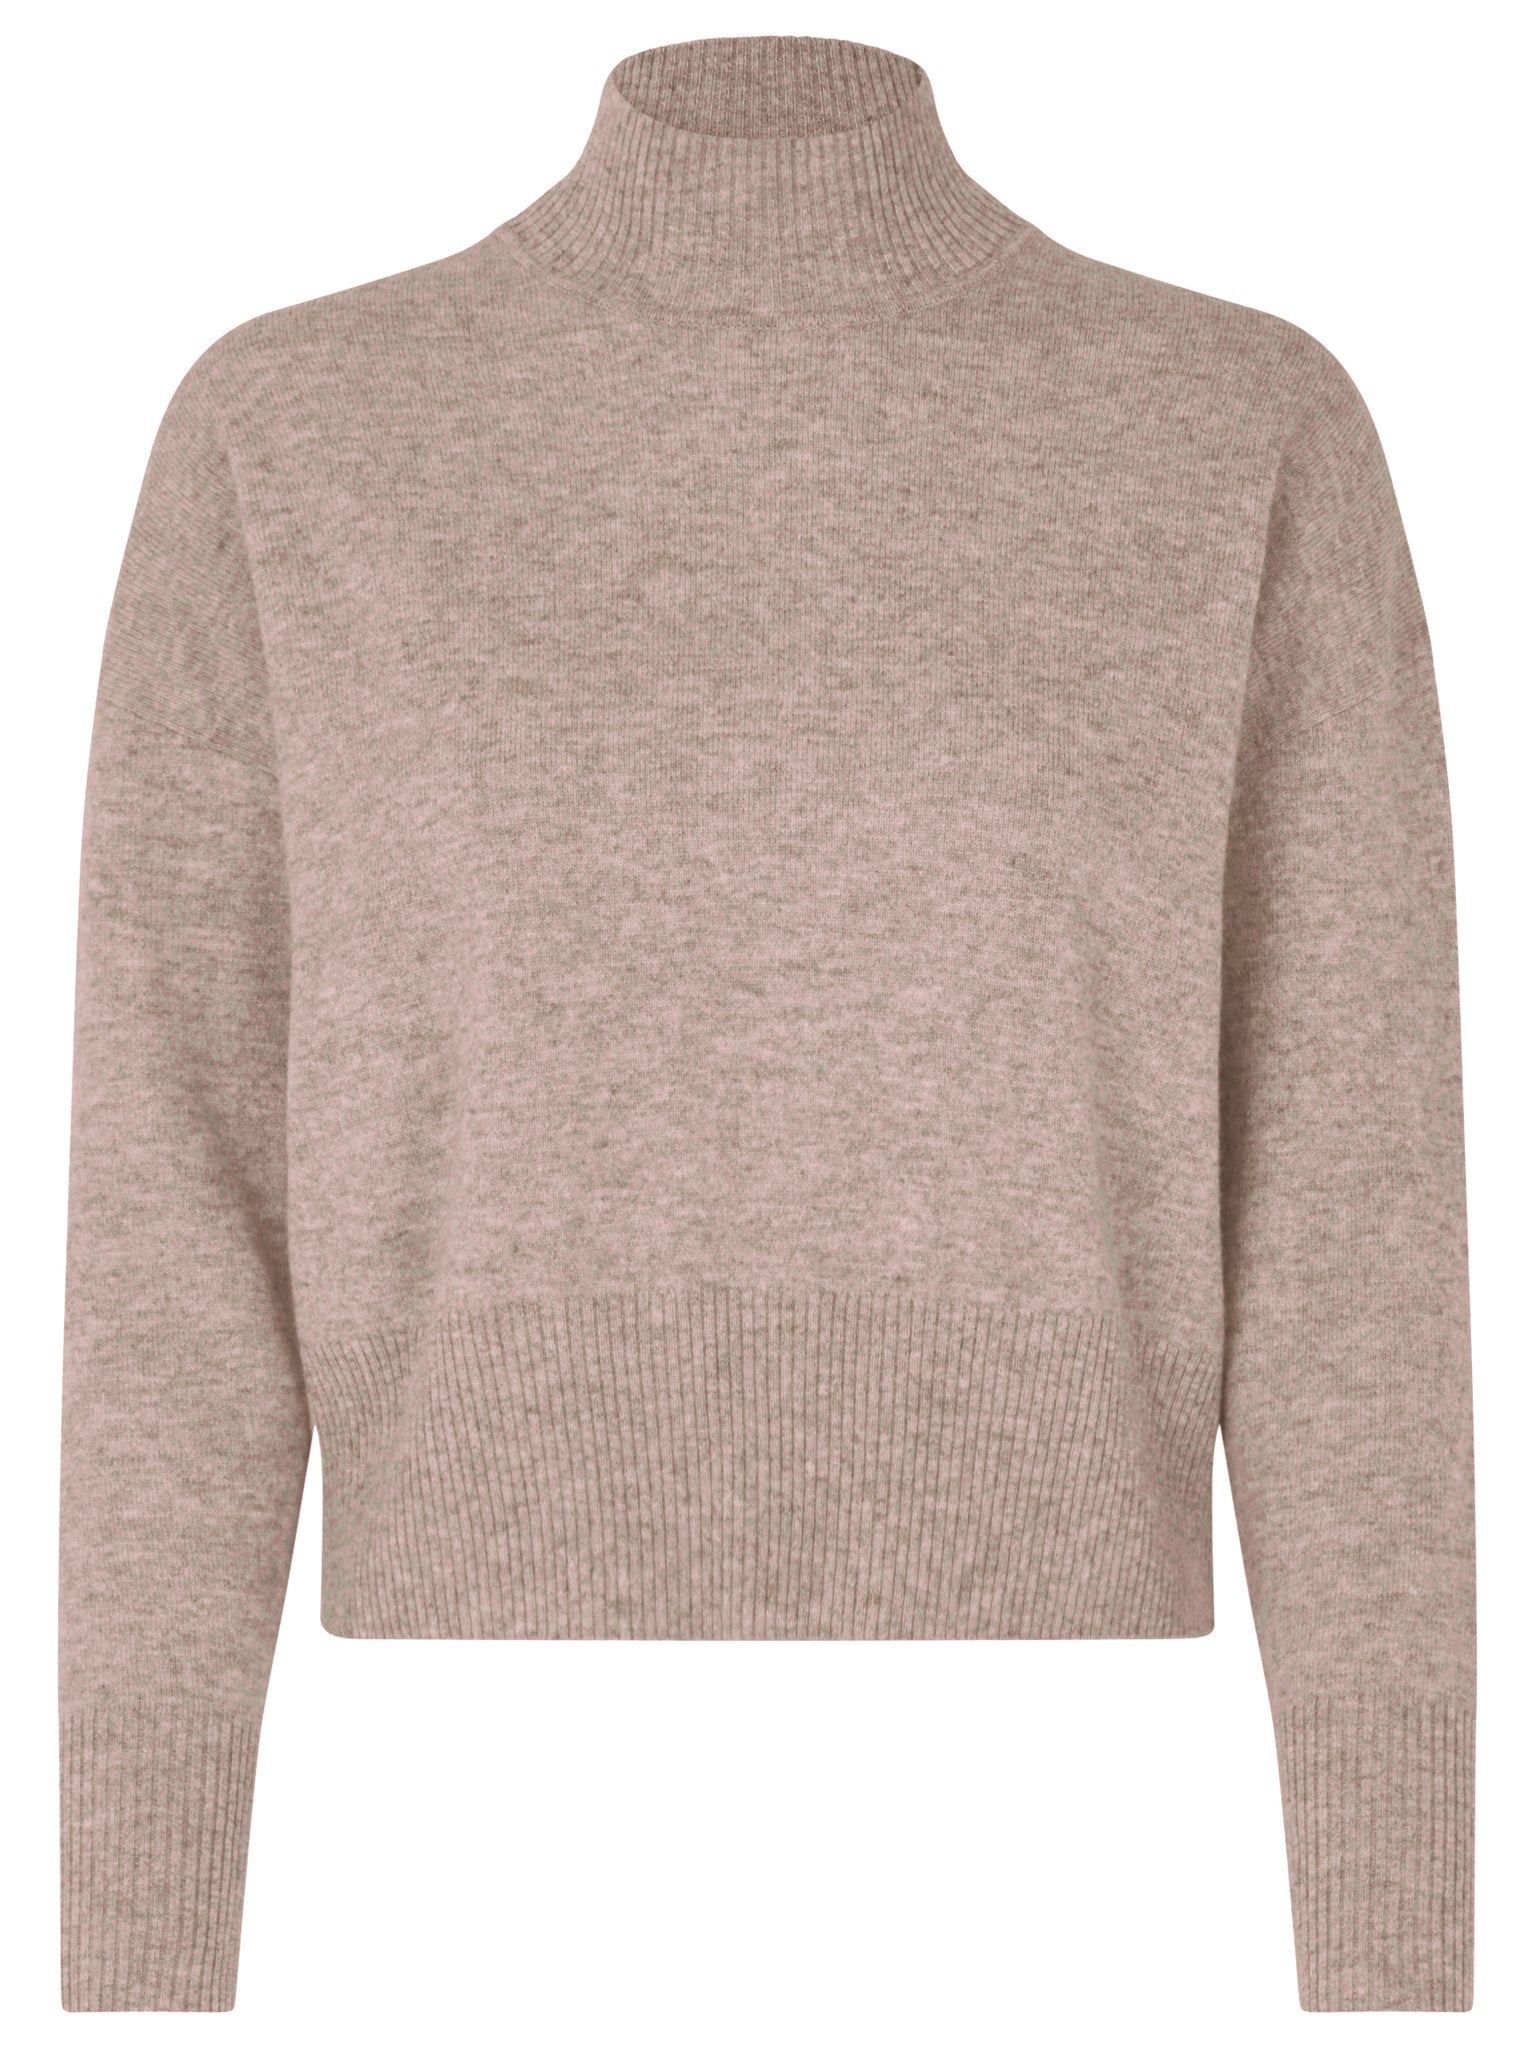 Wool & cashmere turtleneck pullover